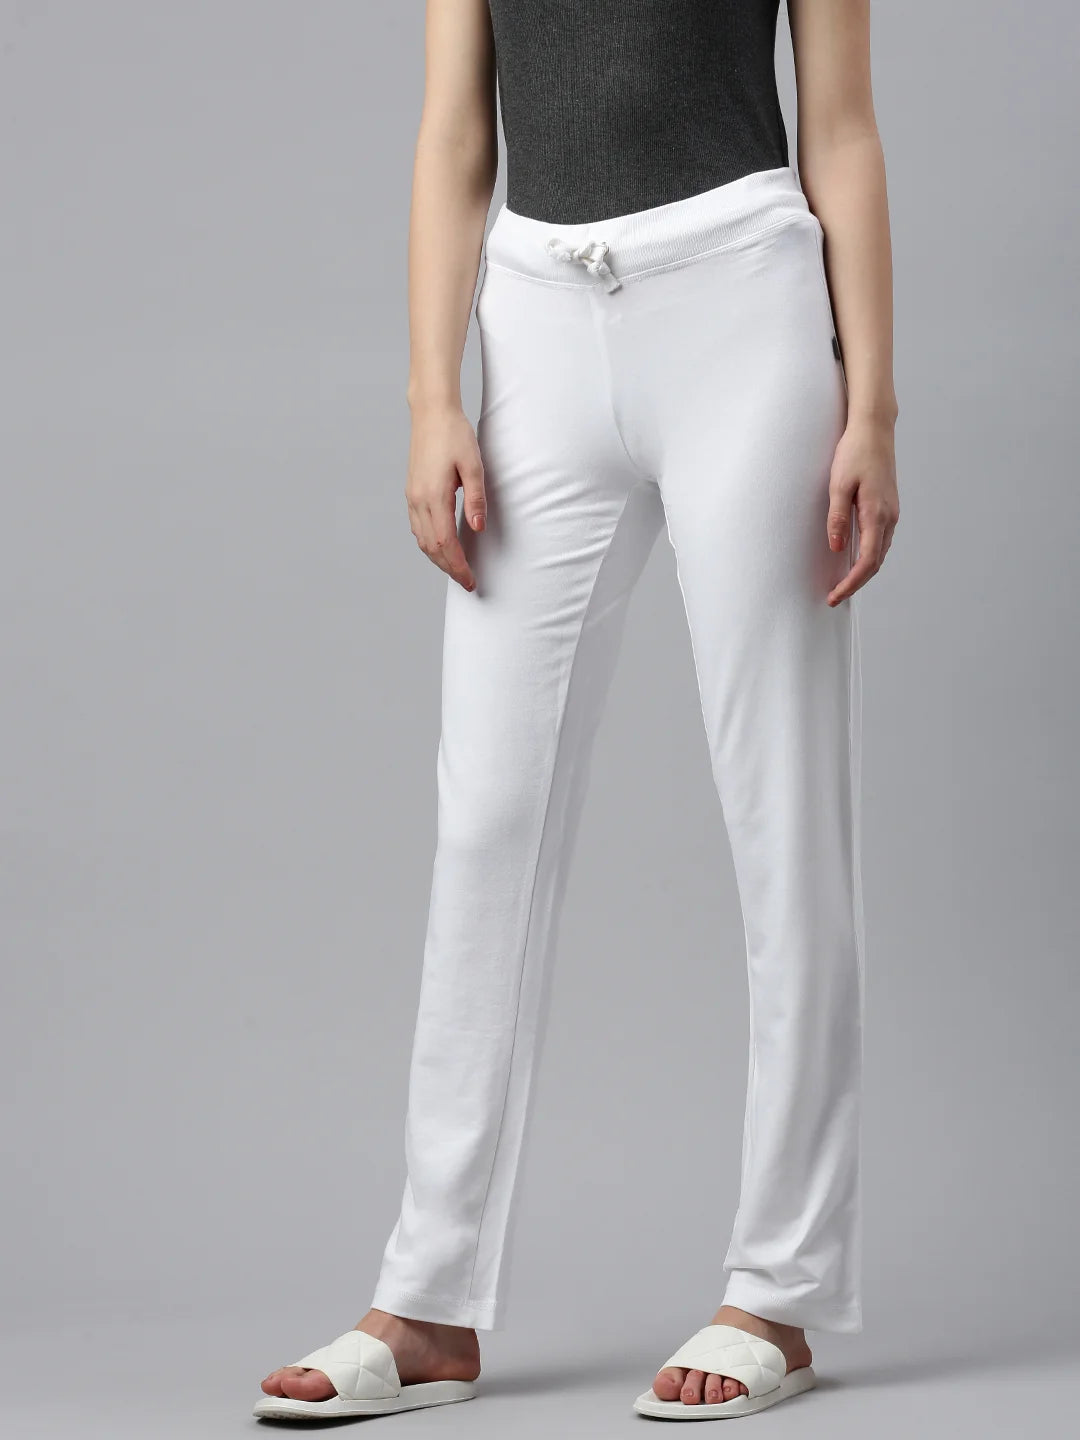 frauen-candice-bio-baumwolle-track-pants-blanc-front